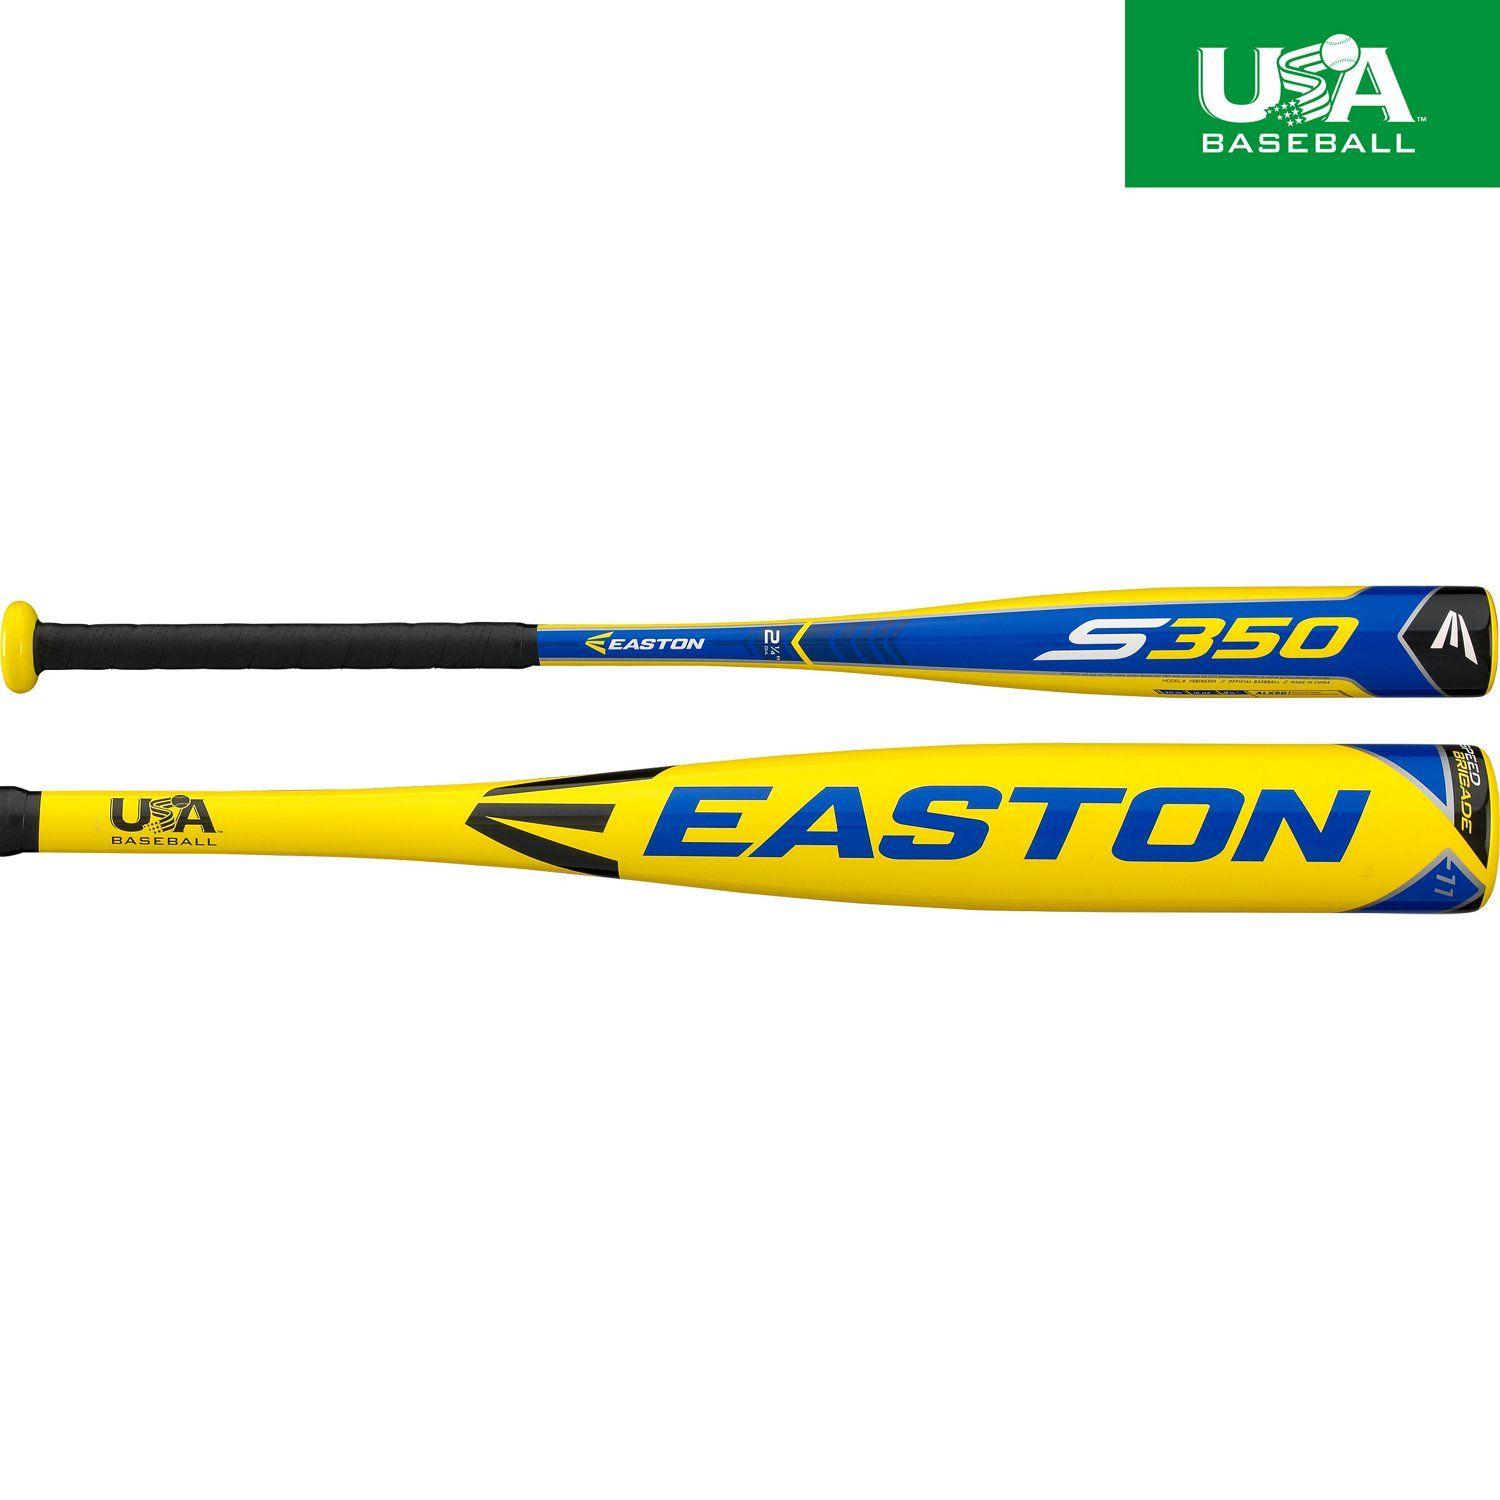 Easton Bat Logo - Baseball Bats. Youth Bats, Wood bats, Softball Bats